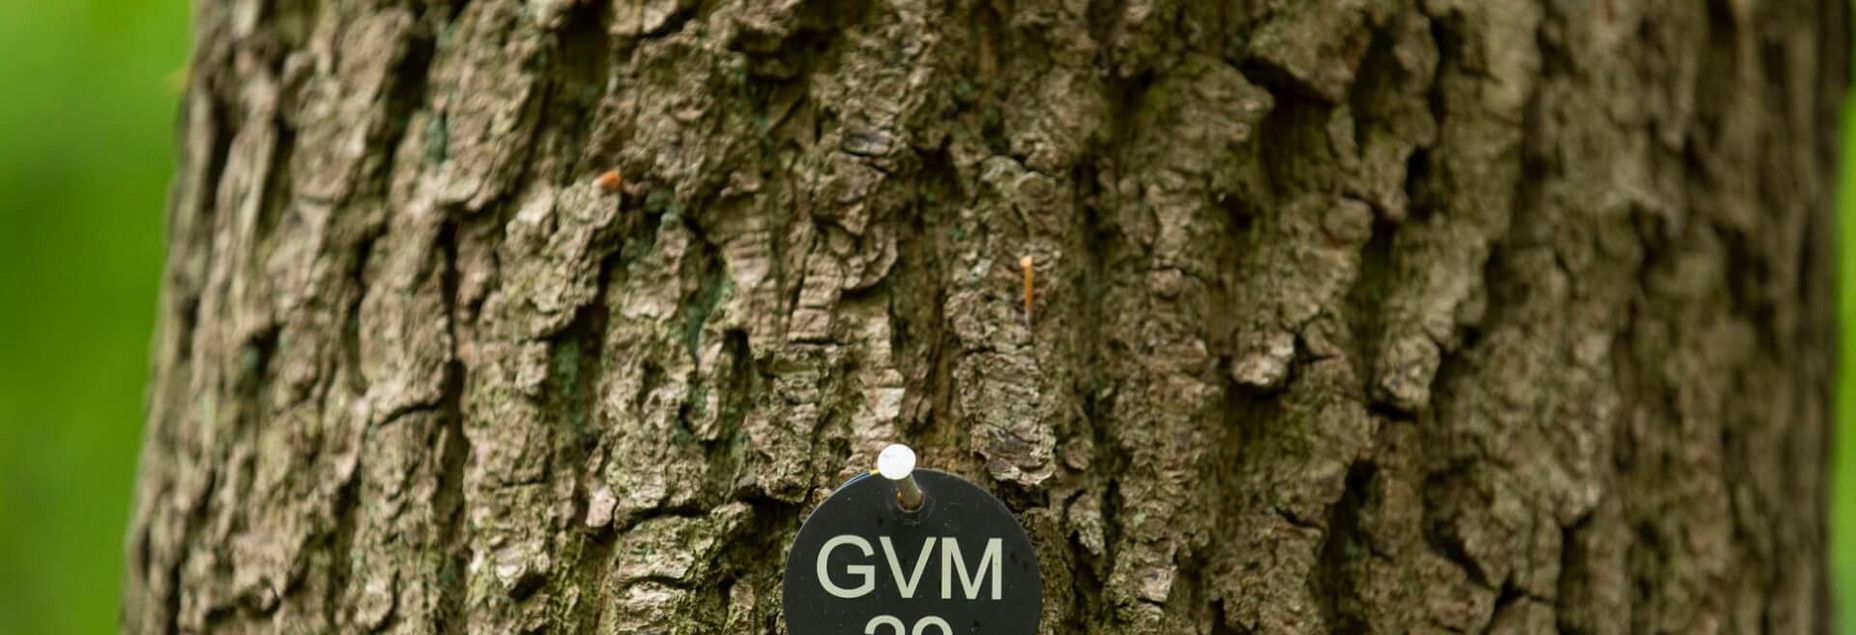 Baum GVM 29 - Plakette